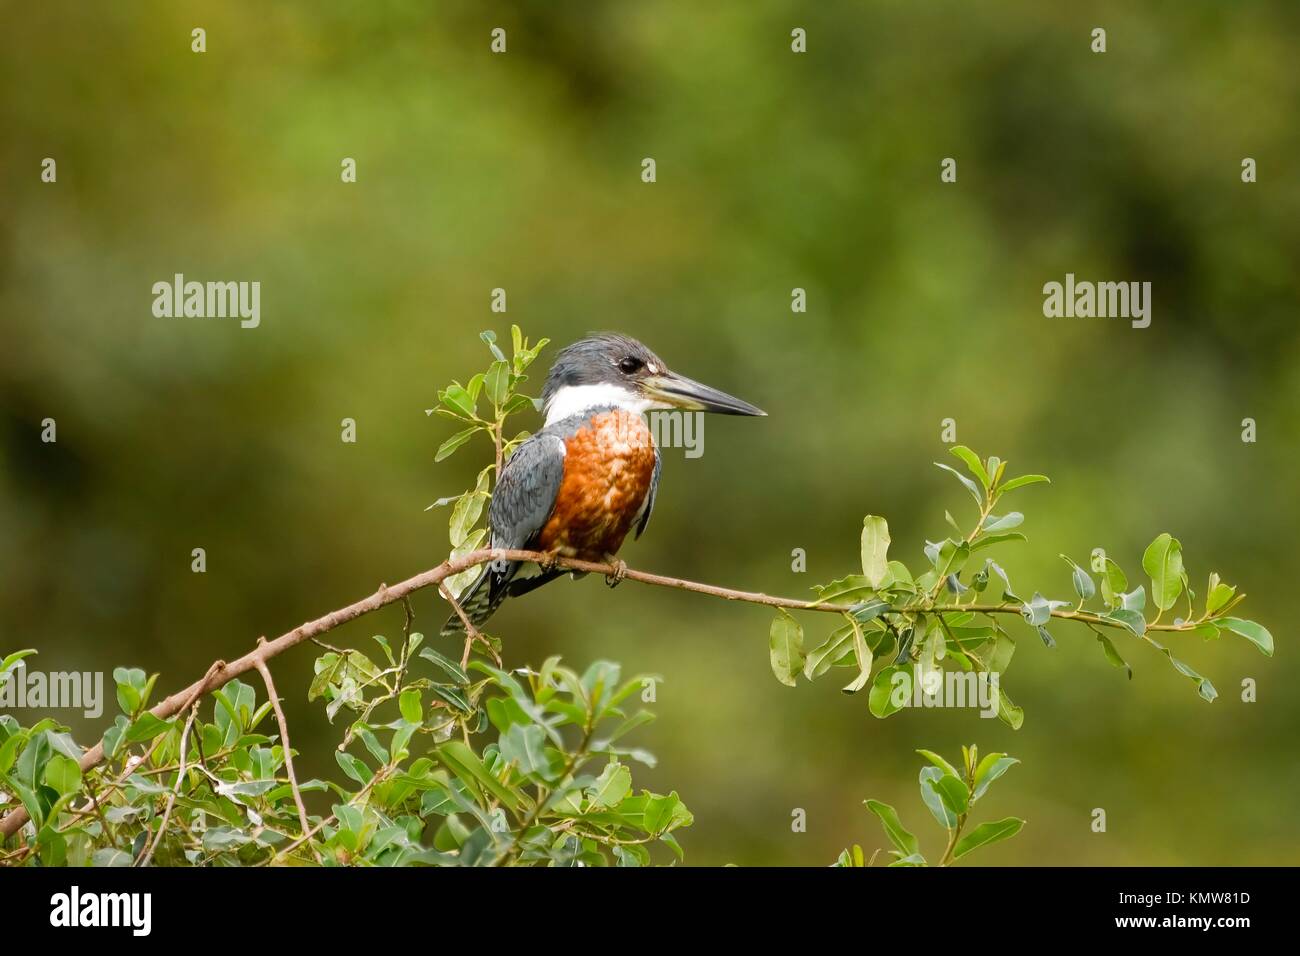 Ringed Kingfisher , Pantanal, Mato Grosso, Brazil / Ceryle torquata - Alcedinidae family – Coraciiformes order Stock Photo